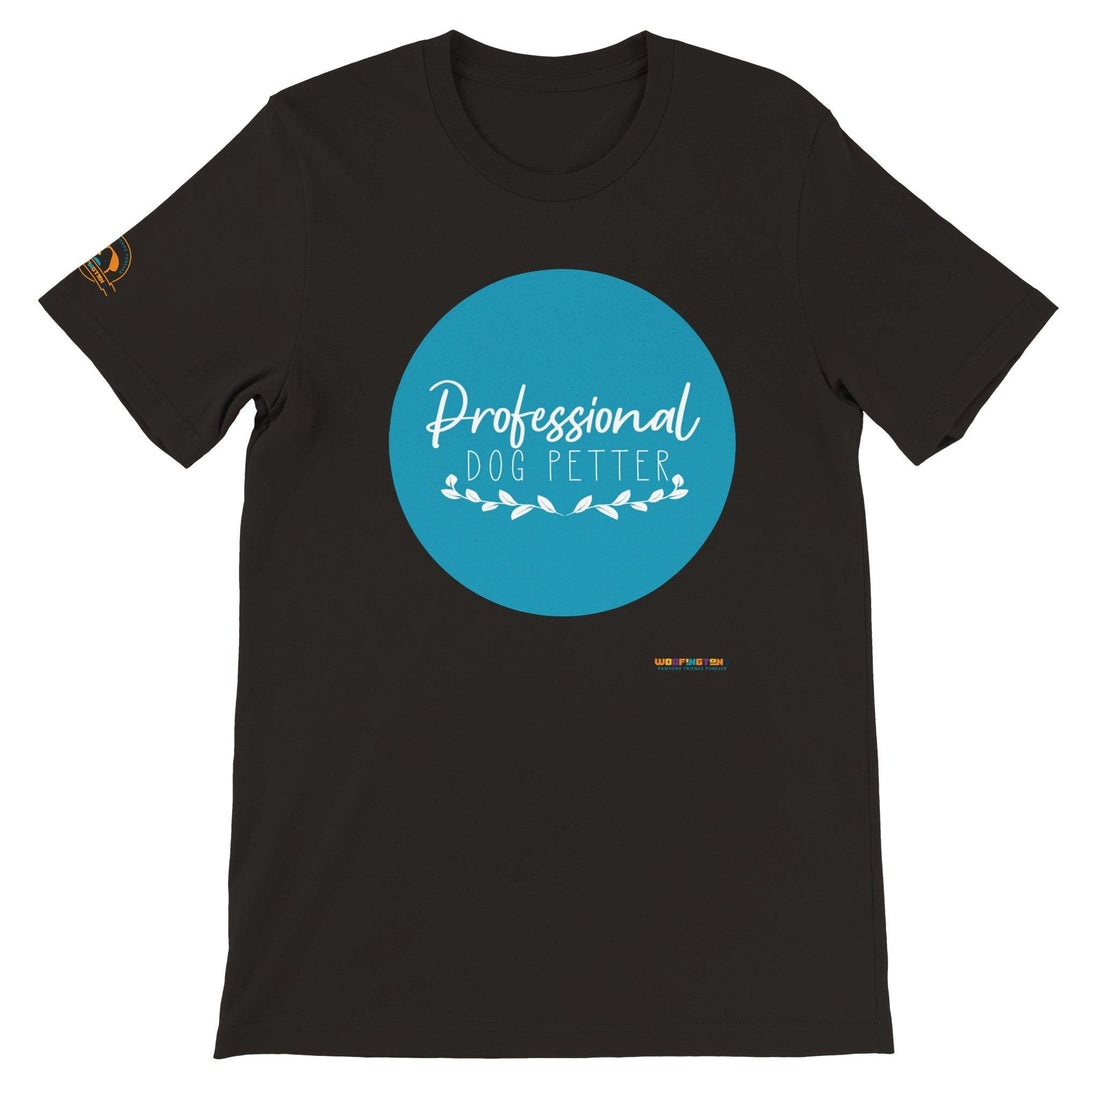 Professional Dog Petter T-shirt - Woofingtons